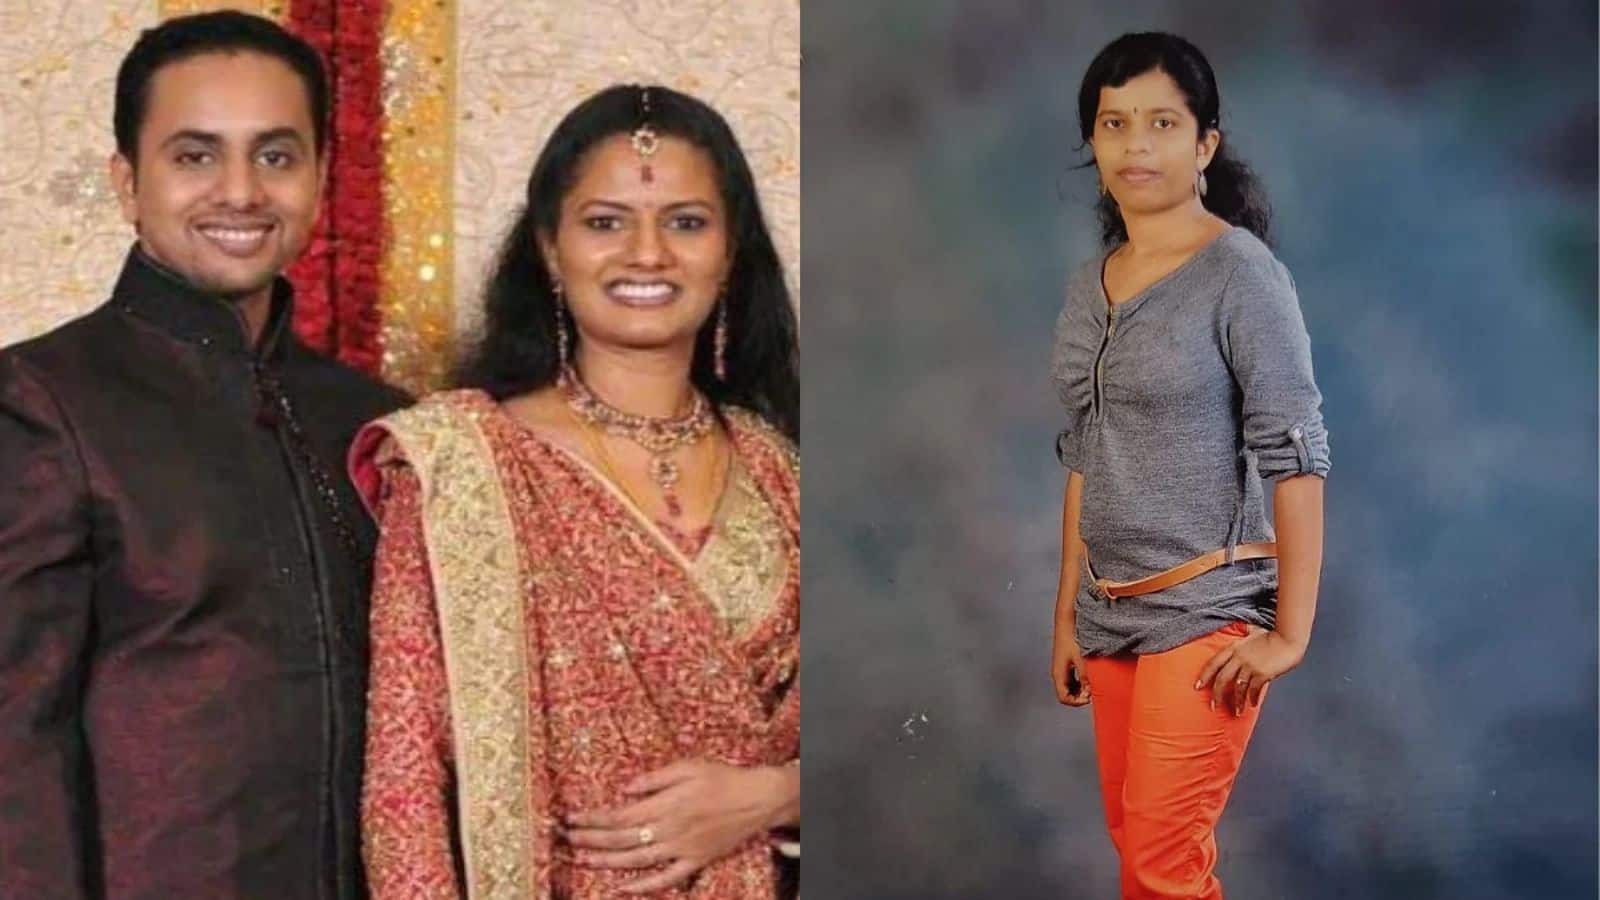 Kerala couple, their friend found dead in Arunachal hotel room